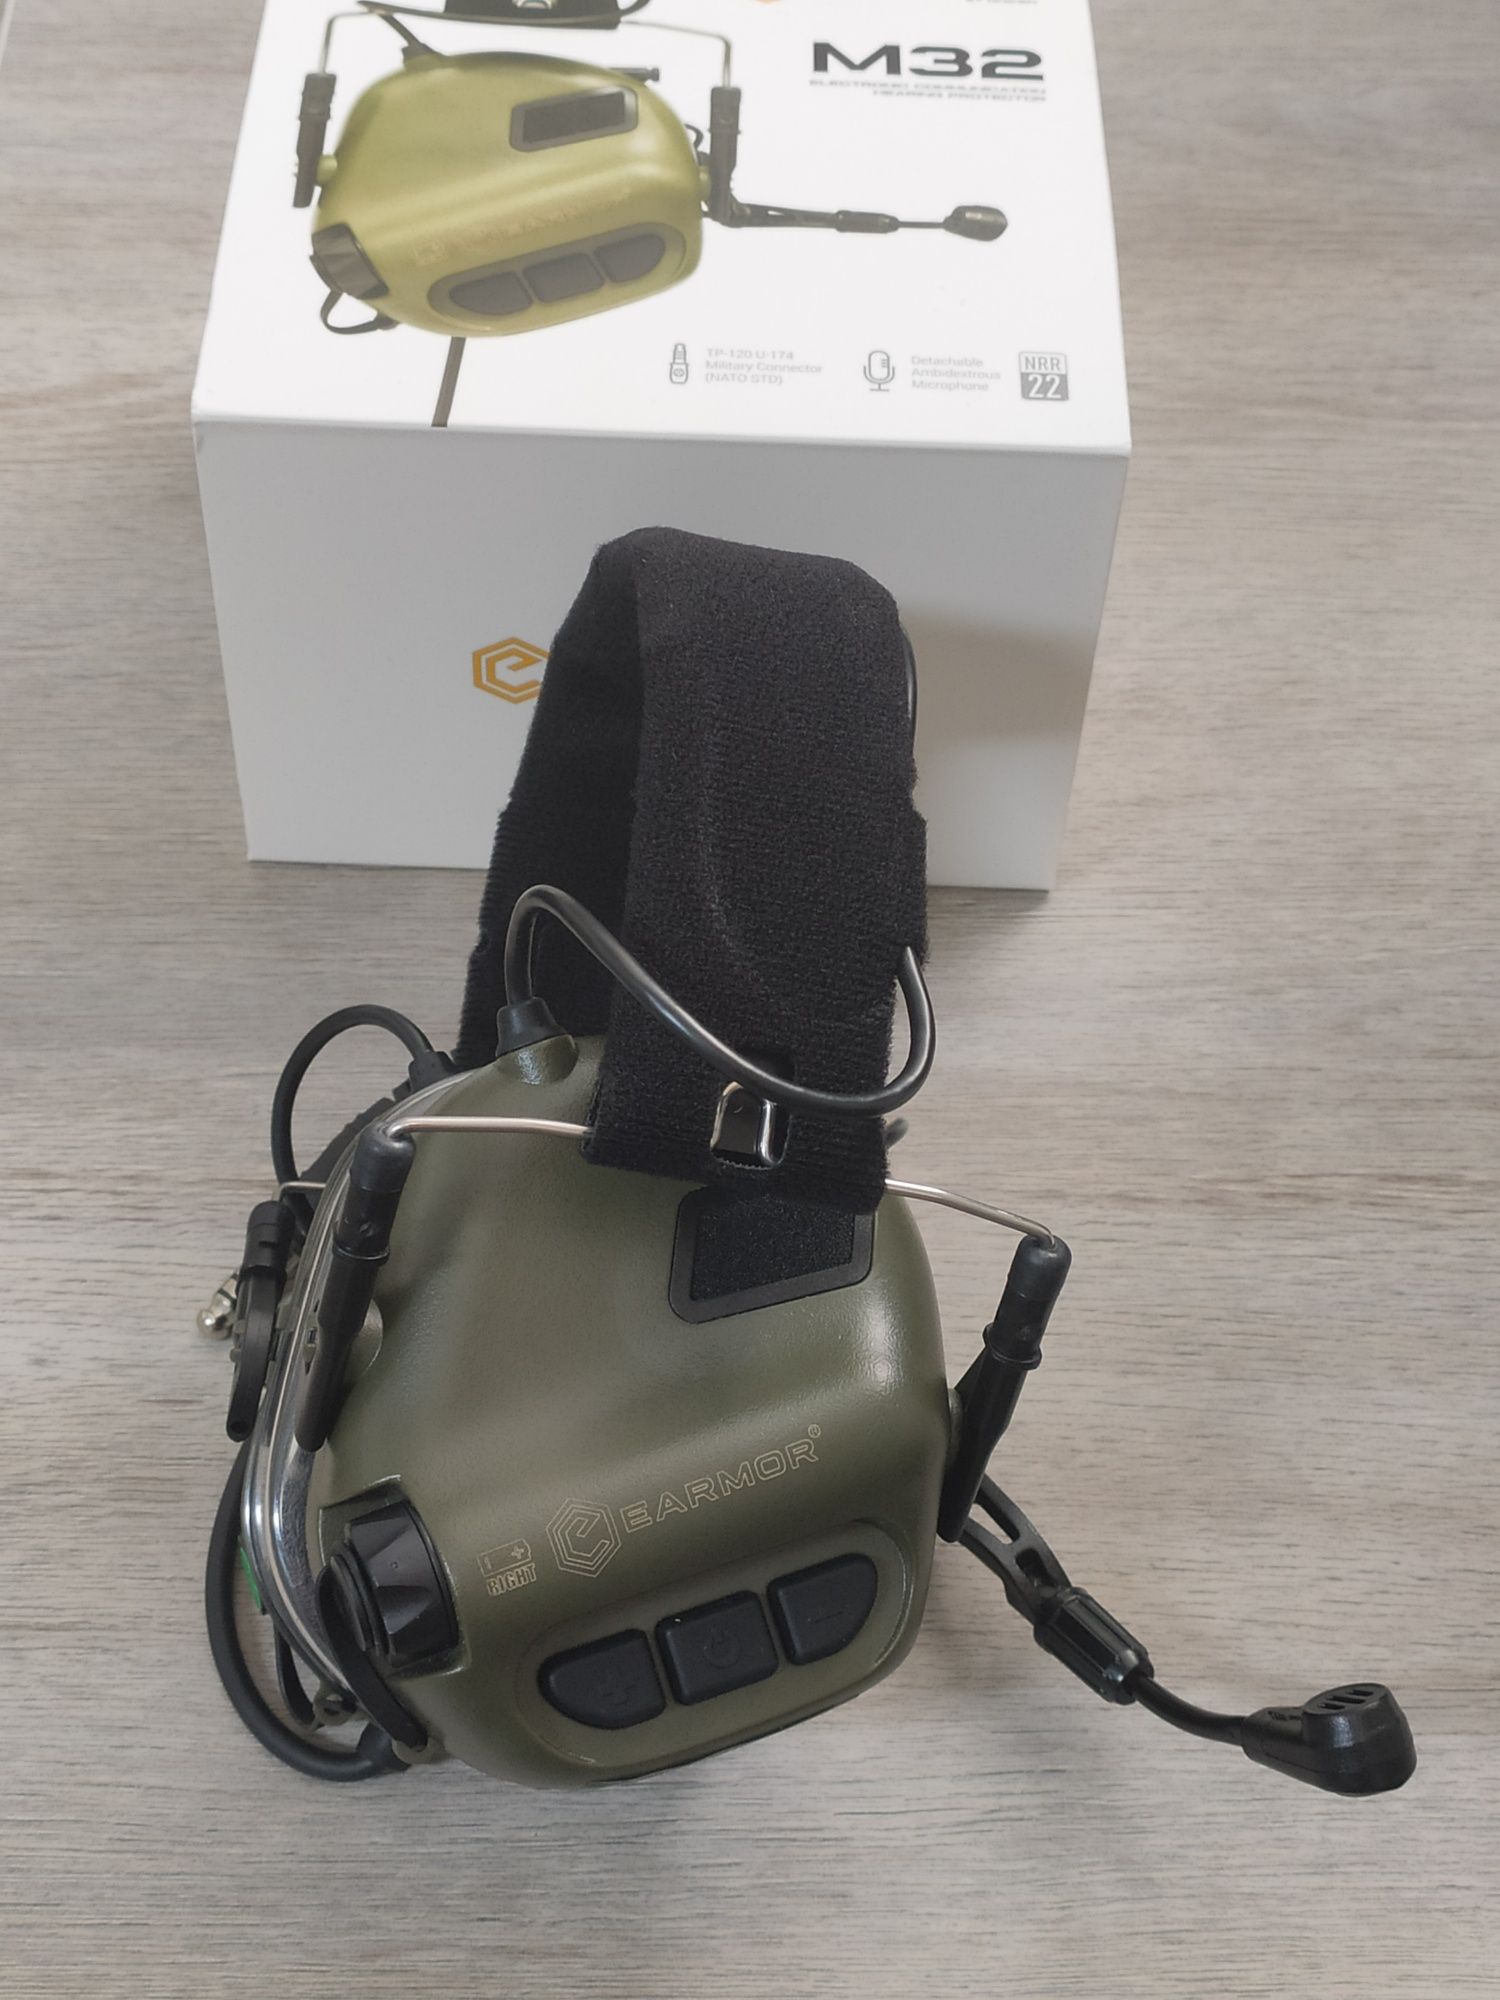 Комплект Earmor M32 + адаптеры на шлем чебурашки